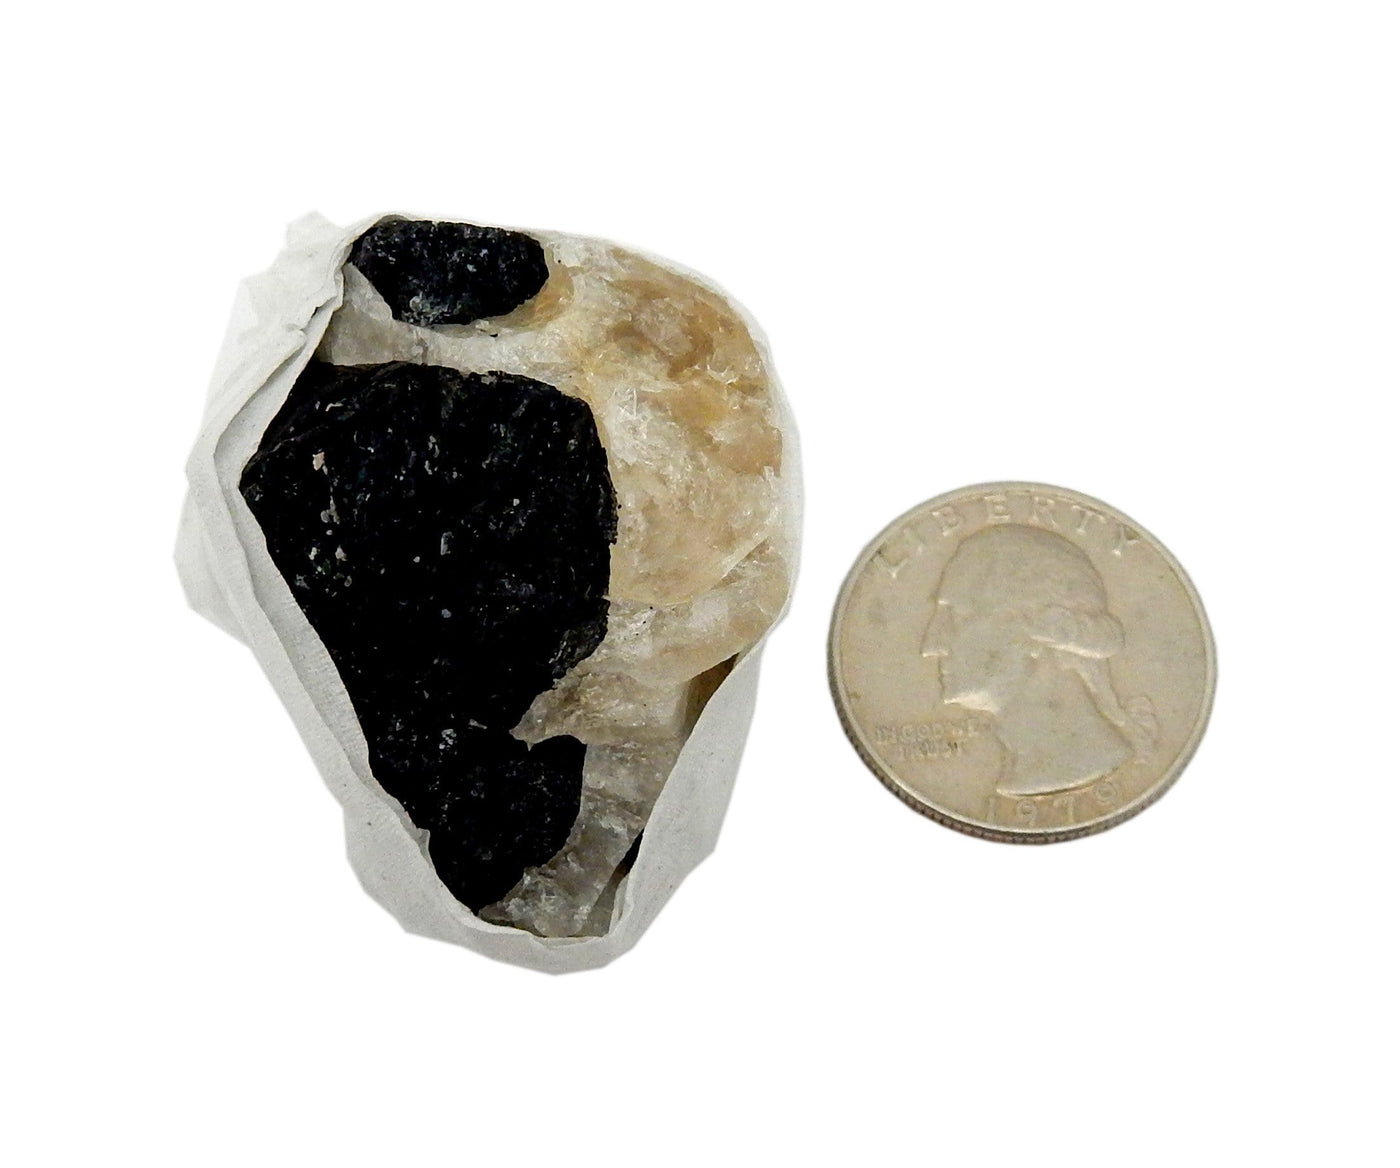 black tourmaline on matrix next to a quarter for size reference